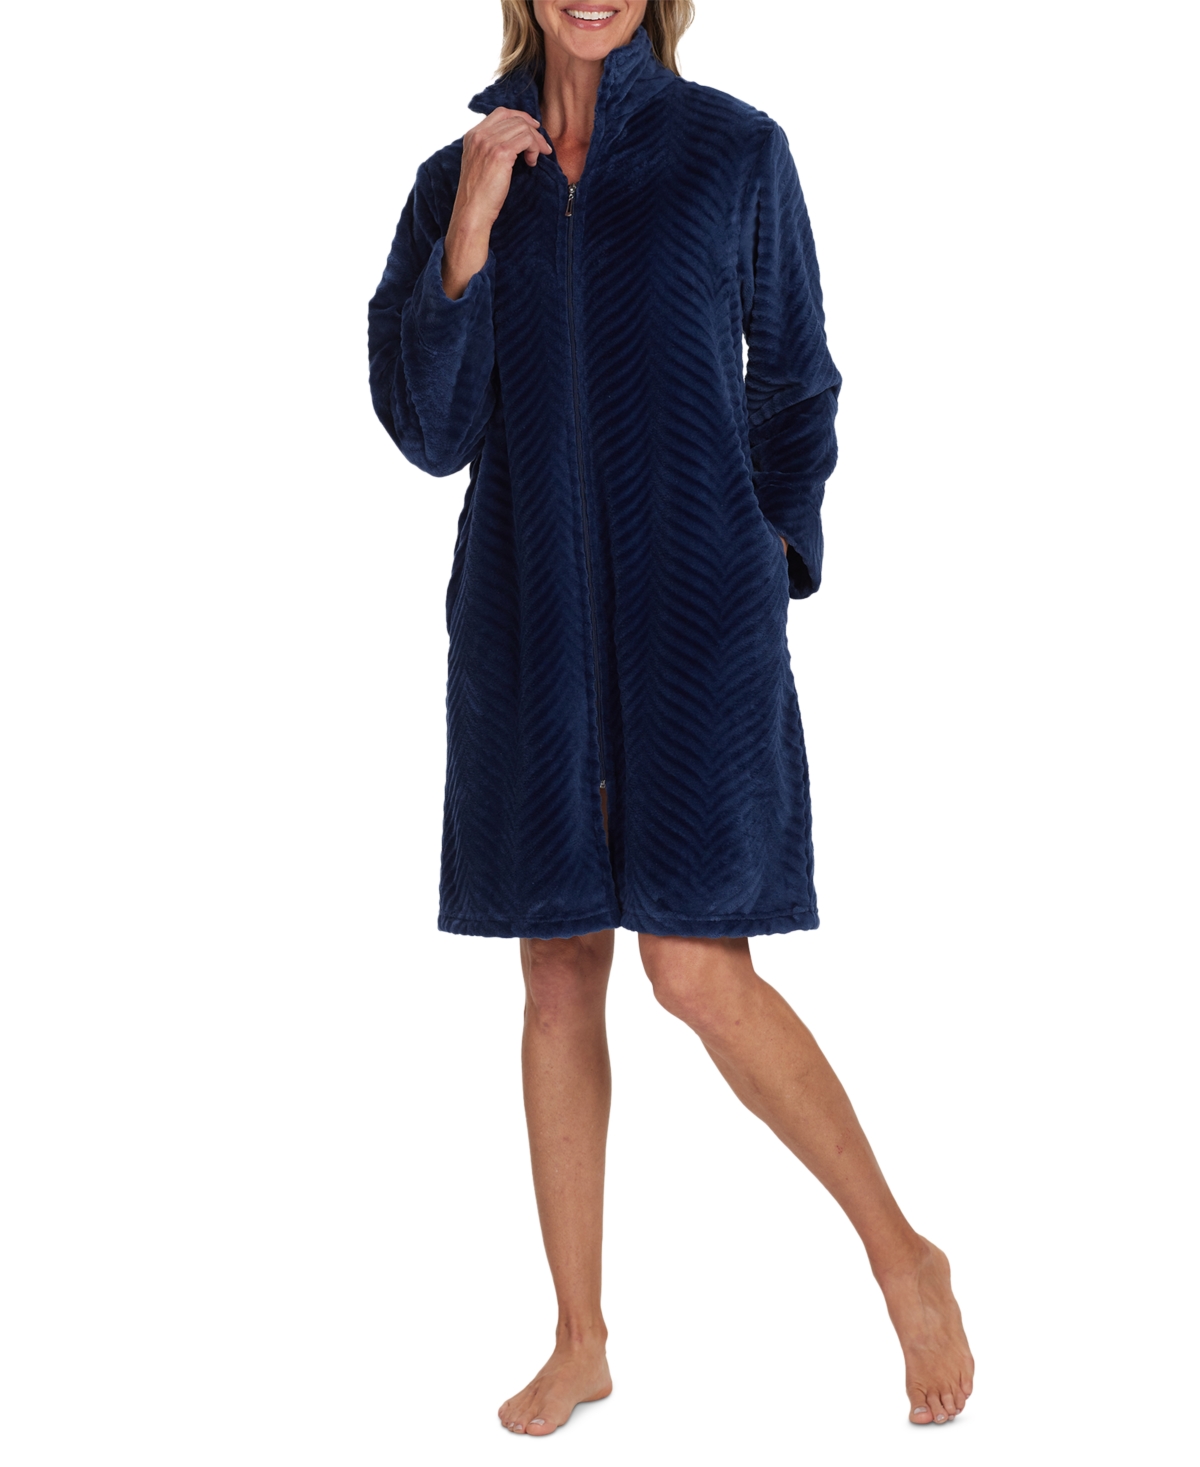 Women's Solid Long-Sleeve Short Zip Fleece Robe - Midnight Blue